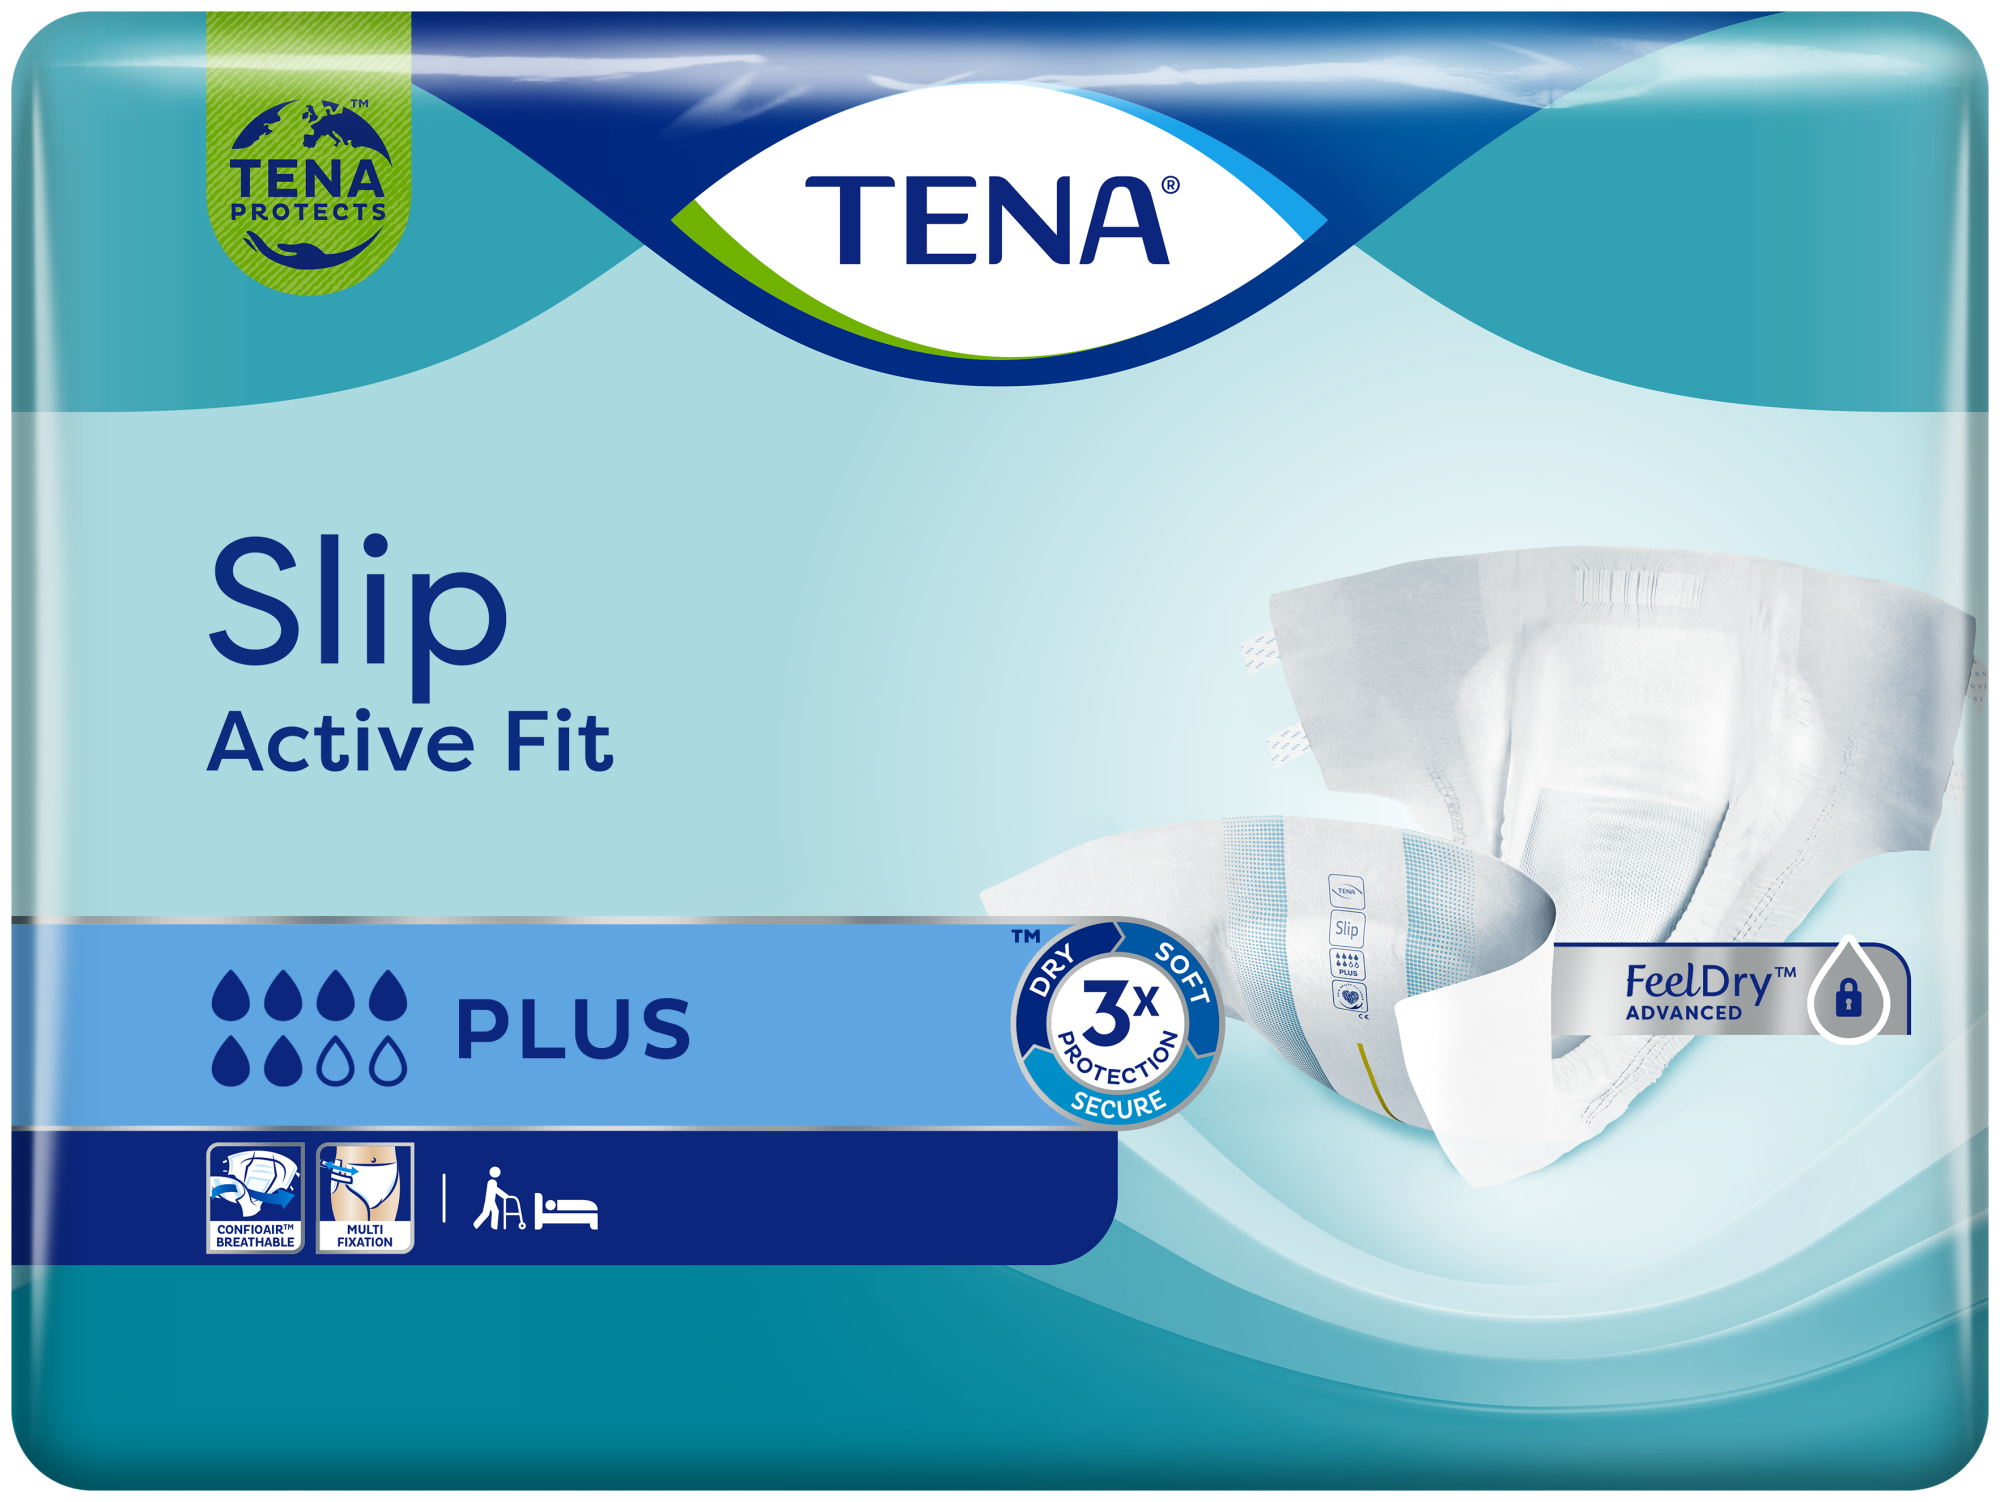 https://tena-images.essity.com/images-c5/585/260585/optimized-AzurePNG2K/tena-slip-activefit-plus-adult-diaper.png